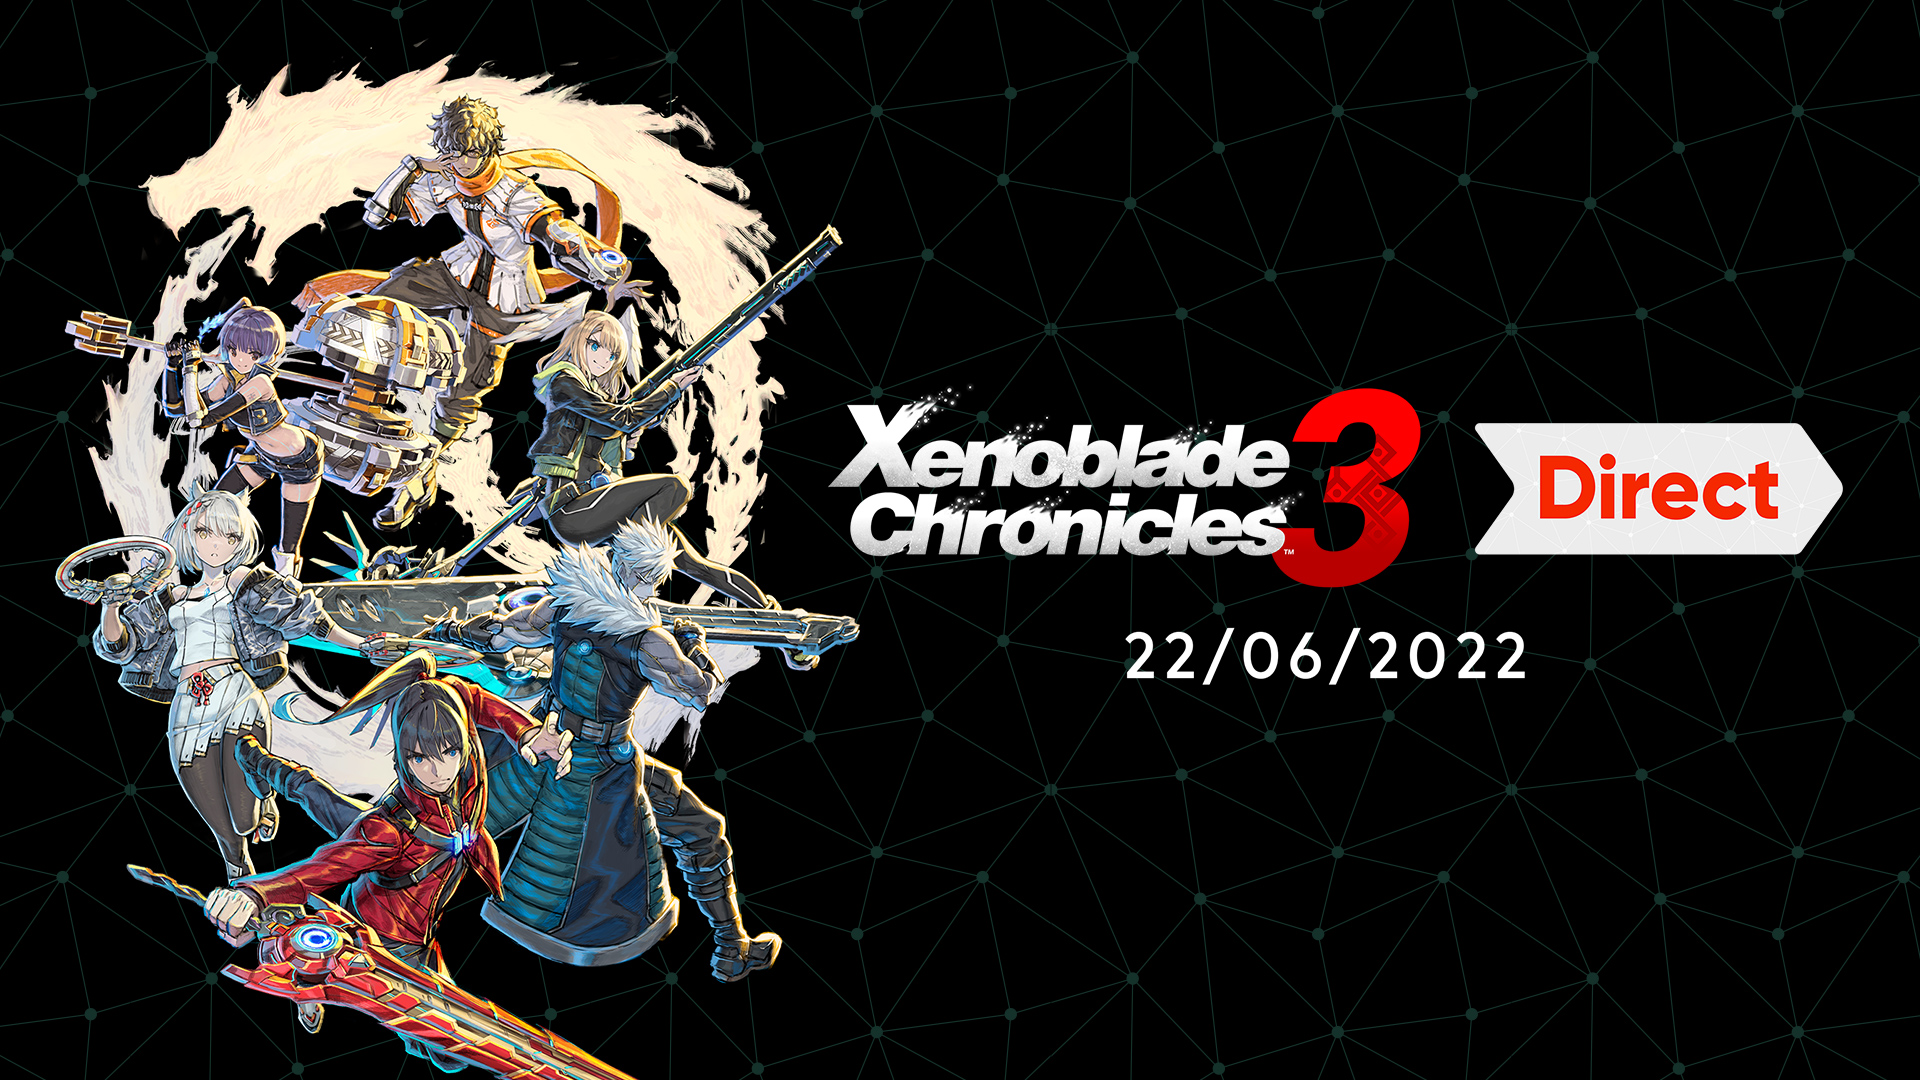 Nintendo tiendra un important Xenoblade Chronicles 3 Direct le 22 juin d'environ 20 minutes avant la sortie du jeu.